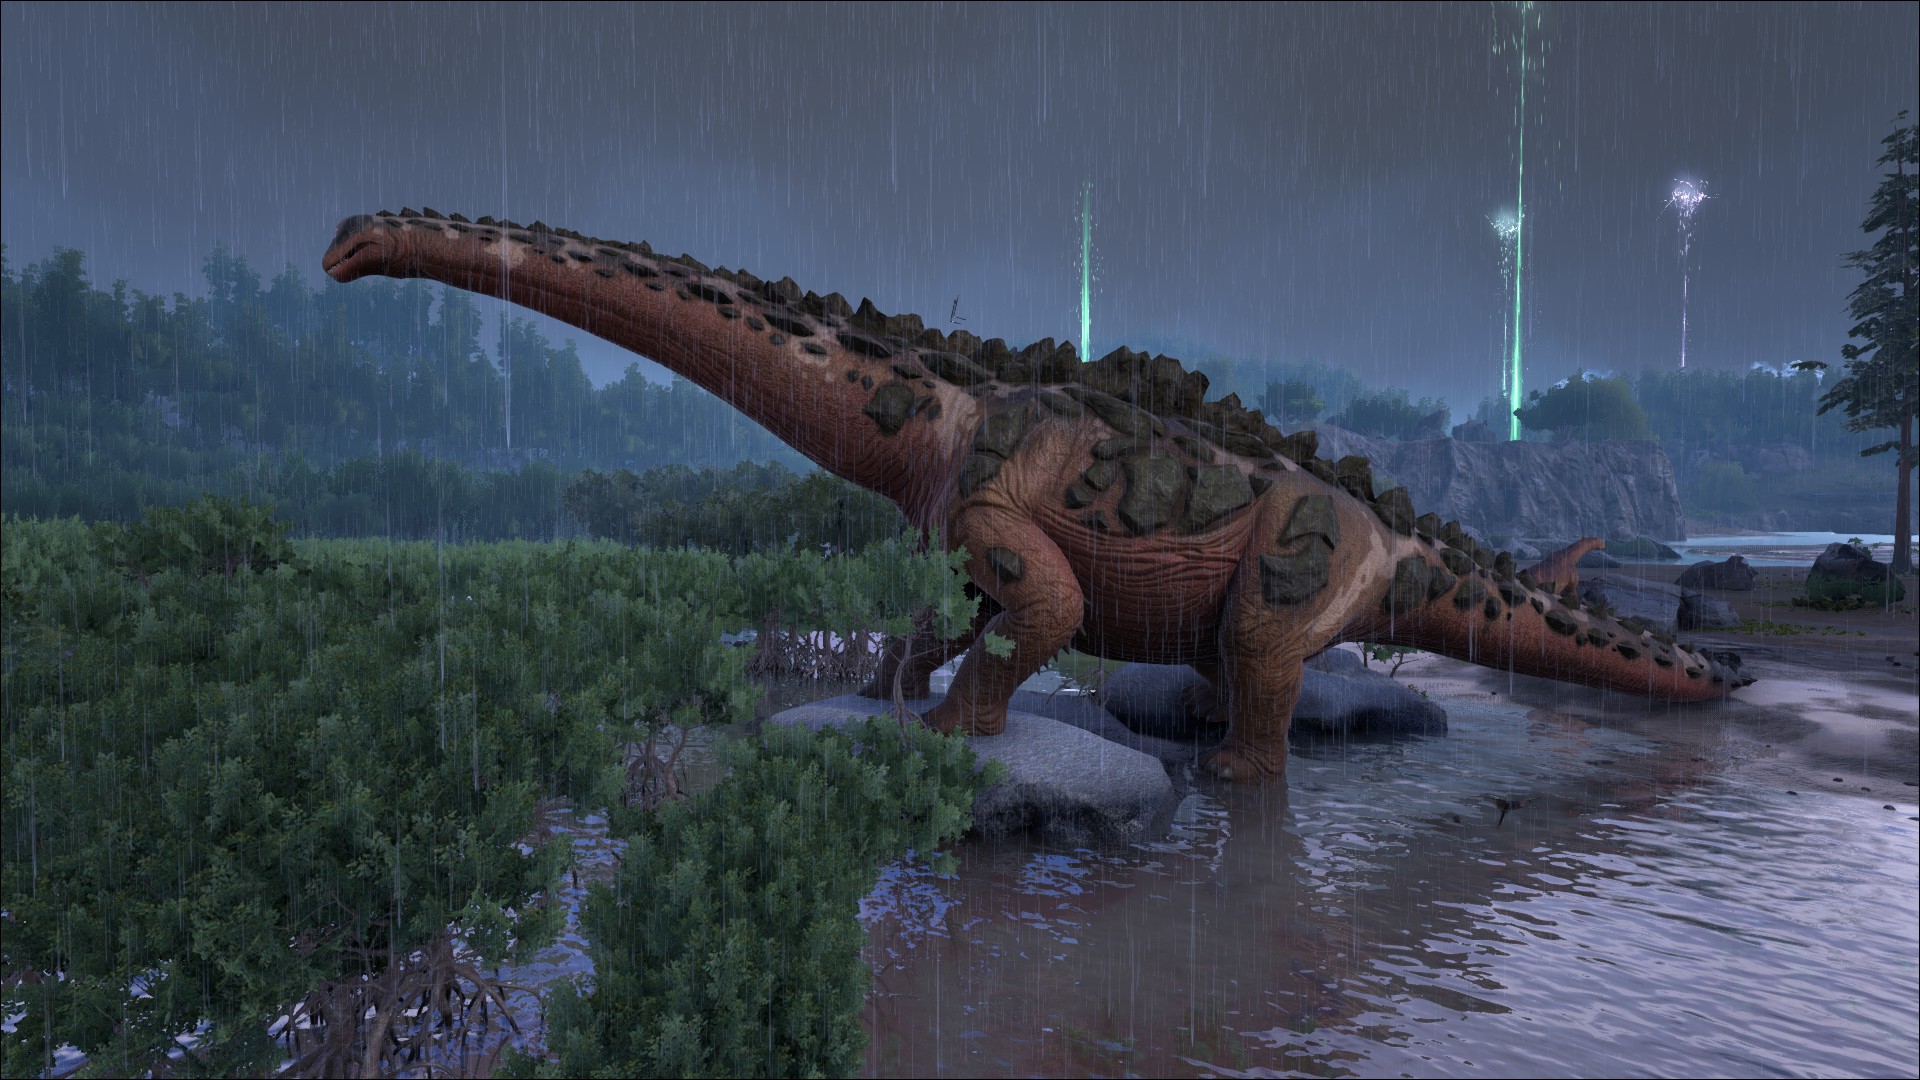 Титанозавр в арк